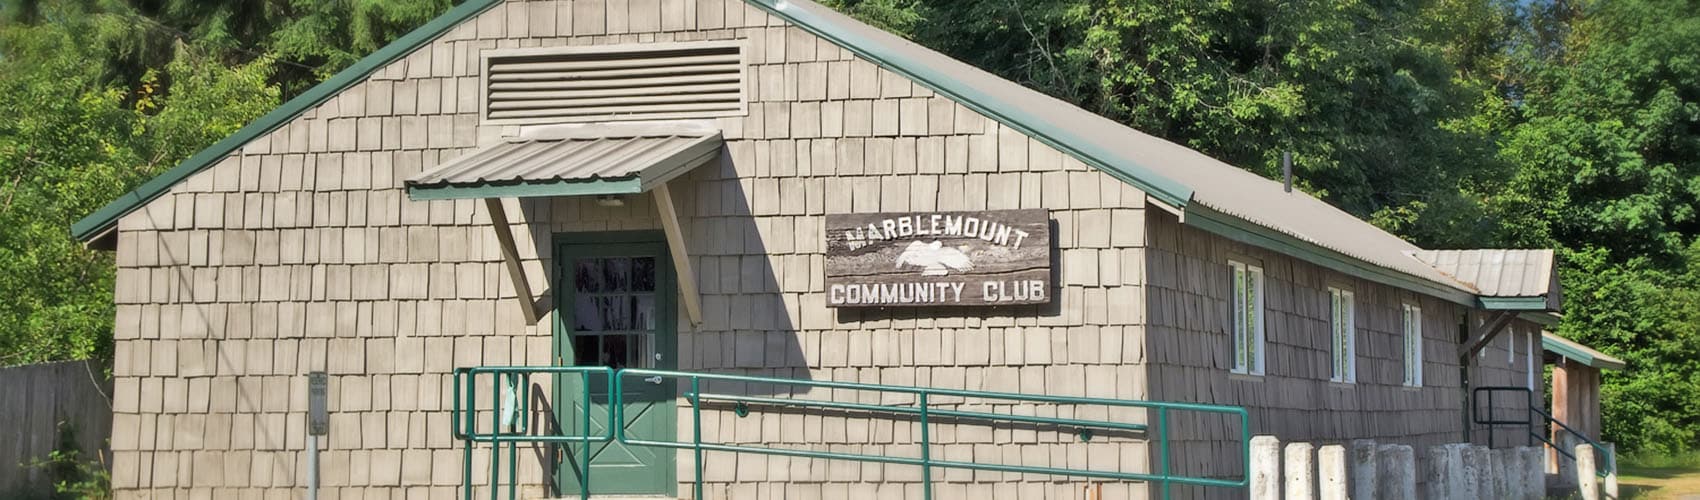 Marblemount Community Hall exterior